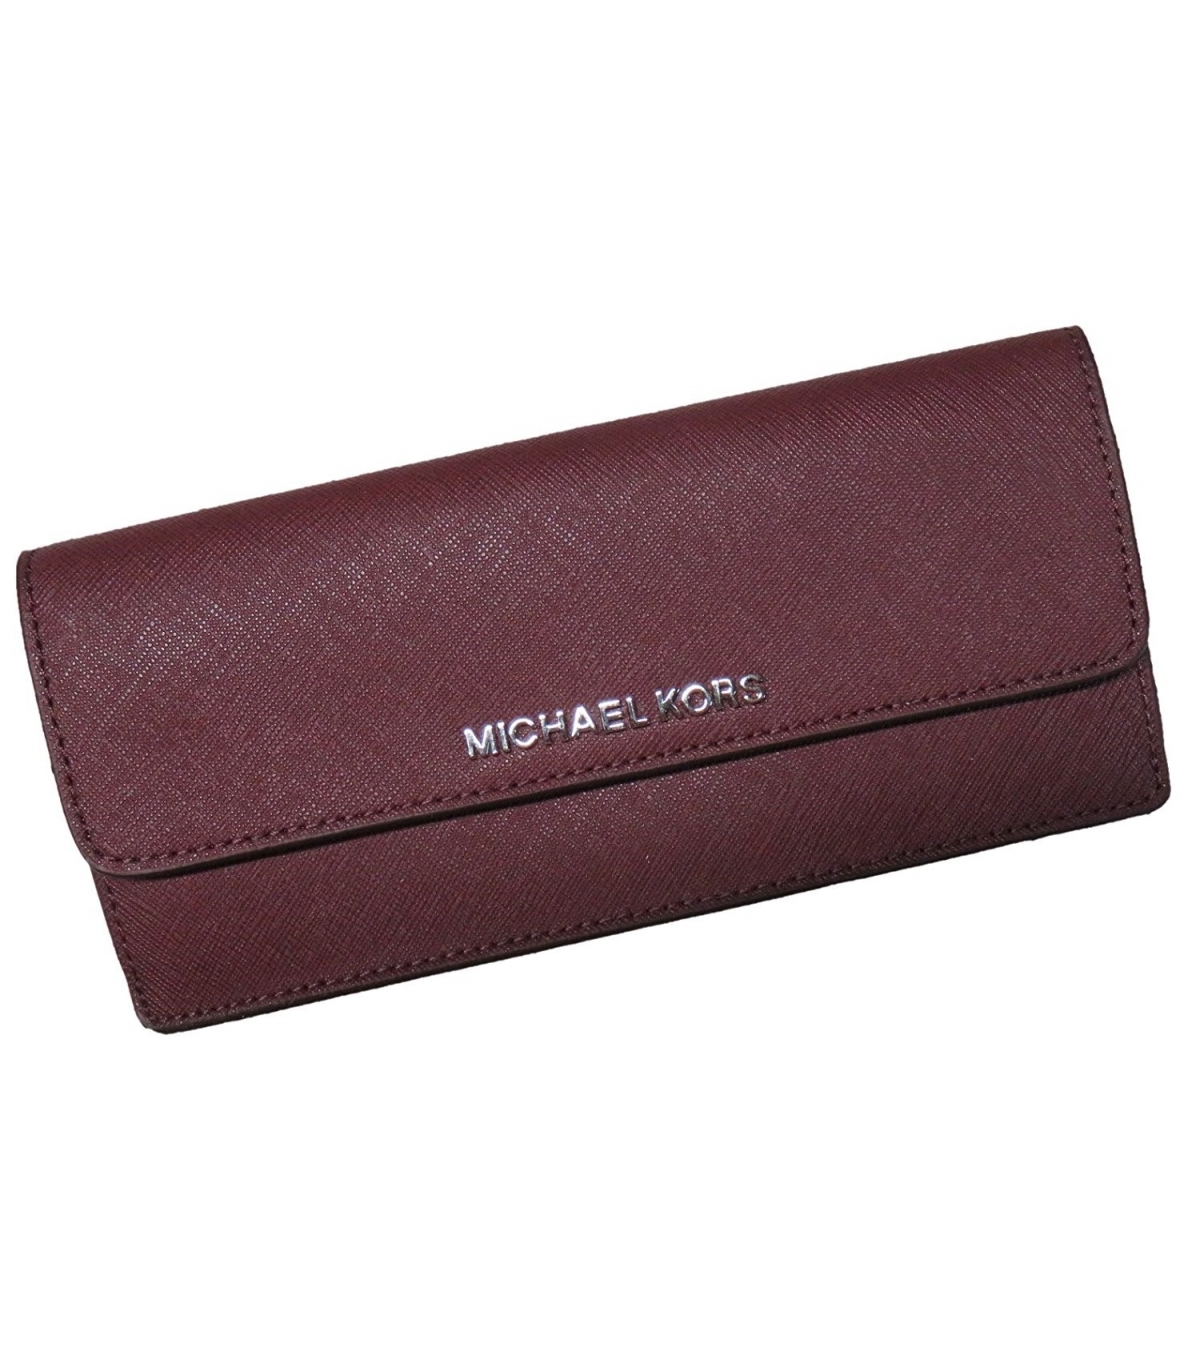 michael kors purse wallet